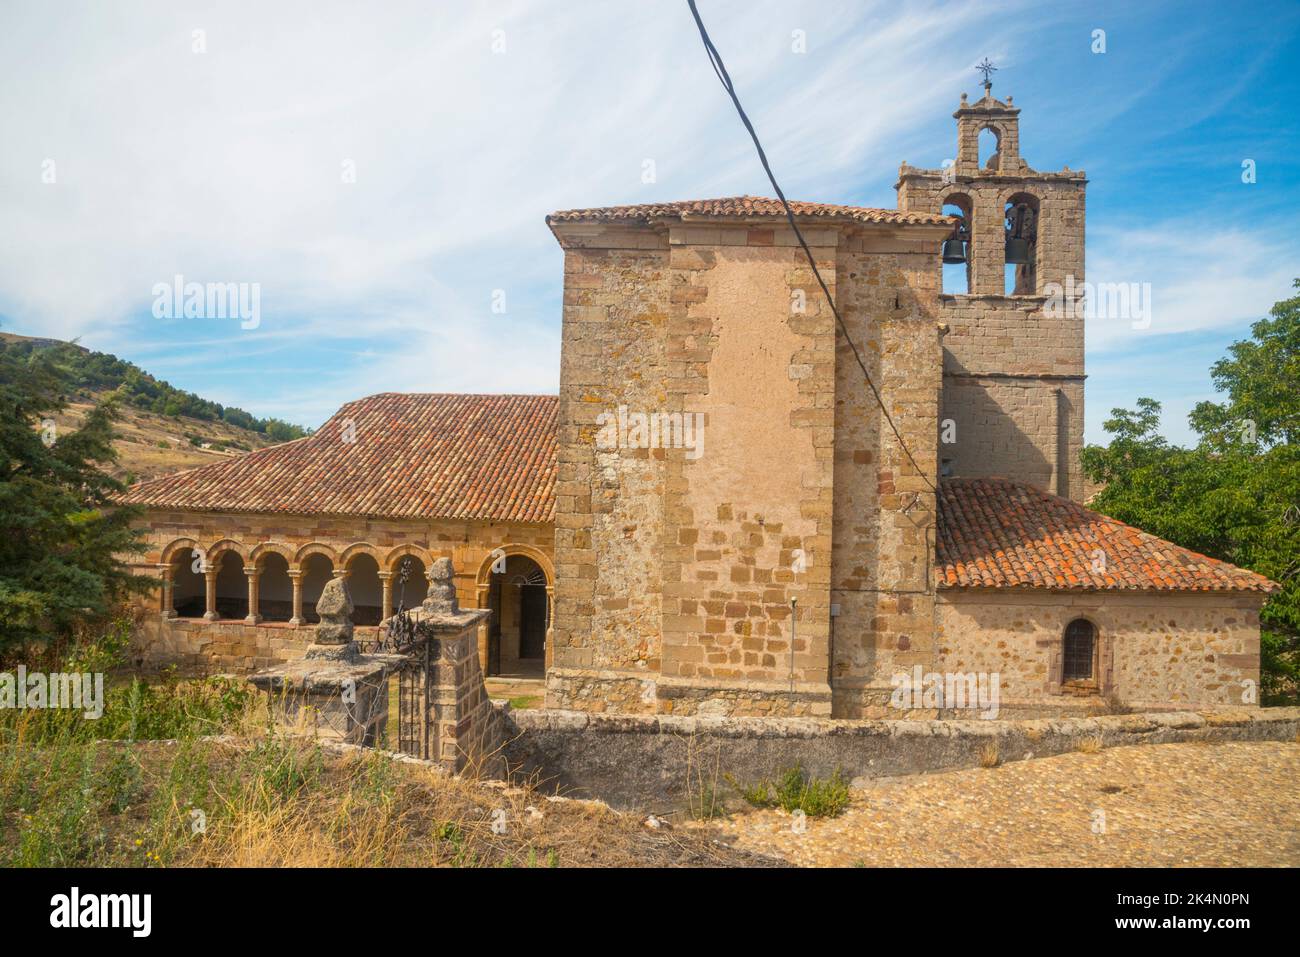 Facade of San Bartolome church. Atienza, Guadalajara province, Castilla La Mancha, Spain. Stock Photo